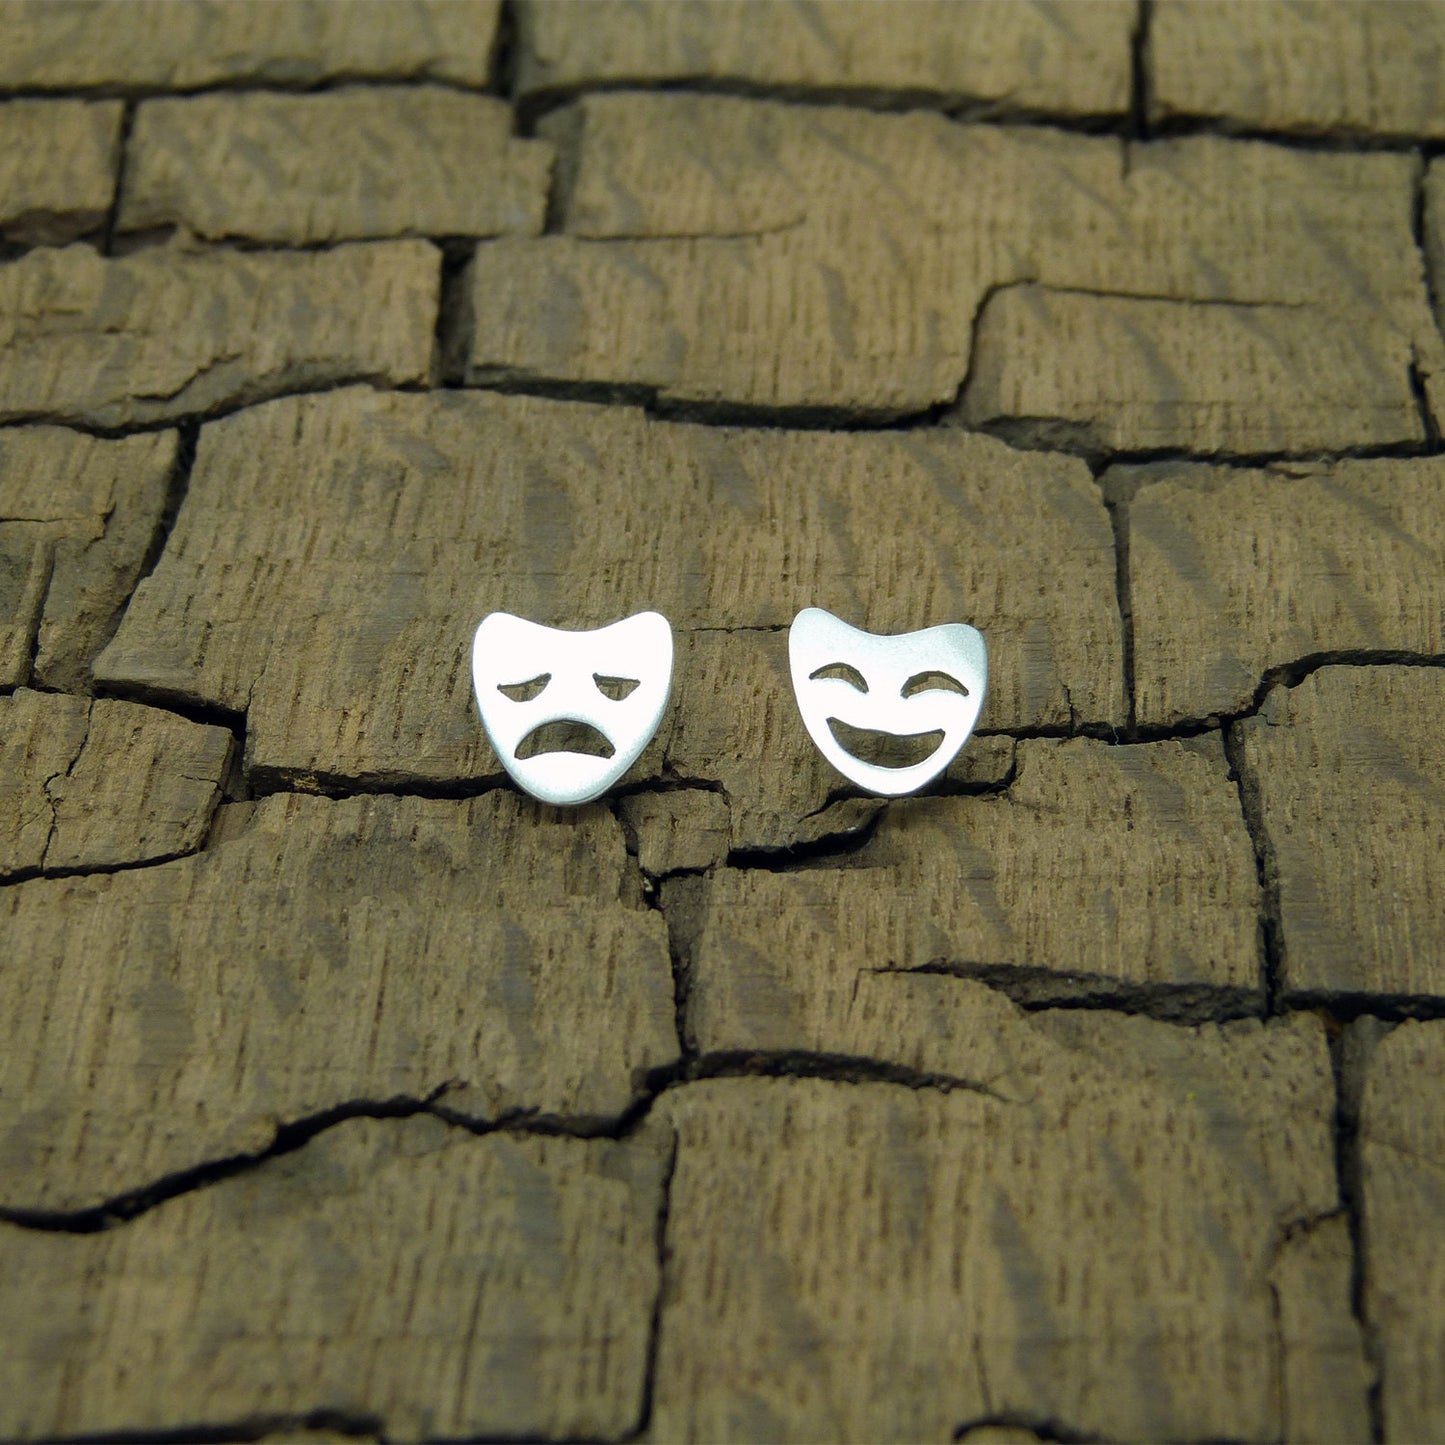 925 silver Masks of Tragedy earrings